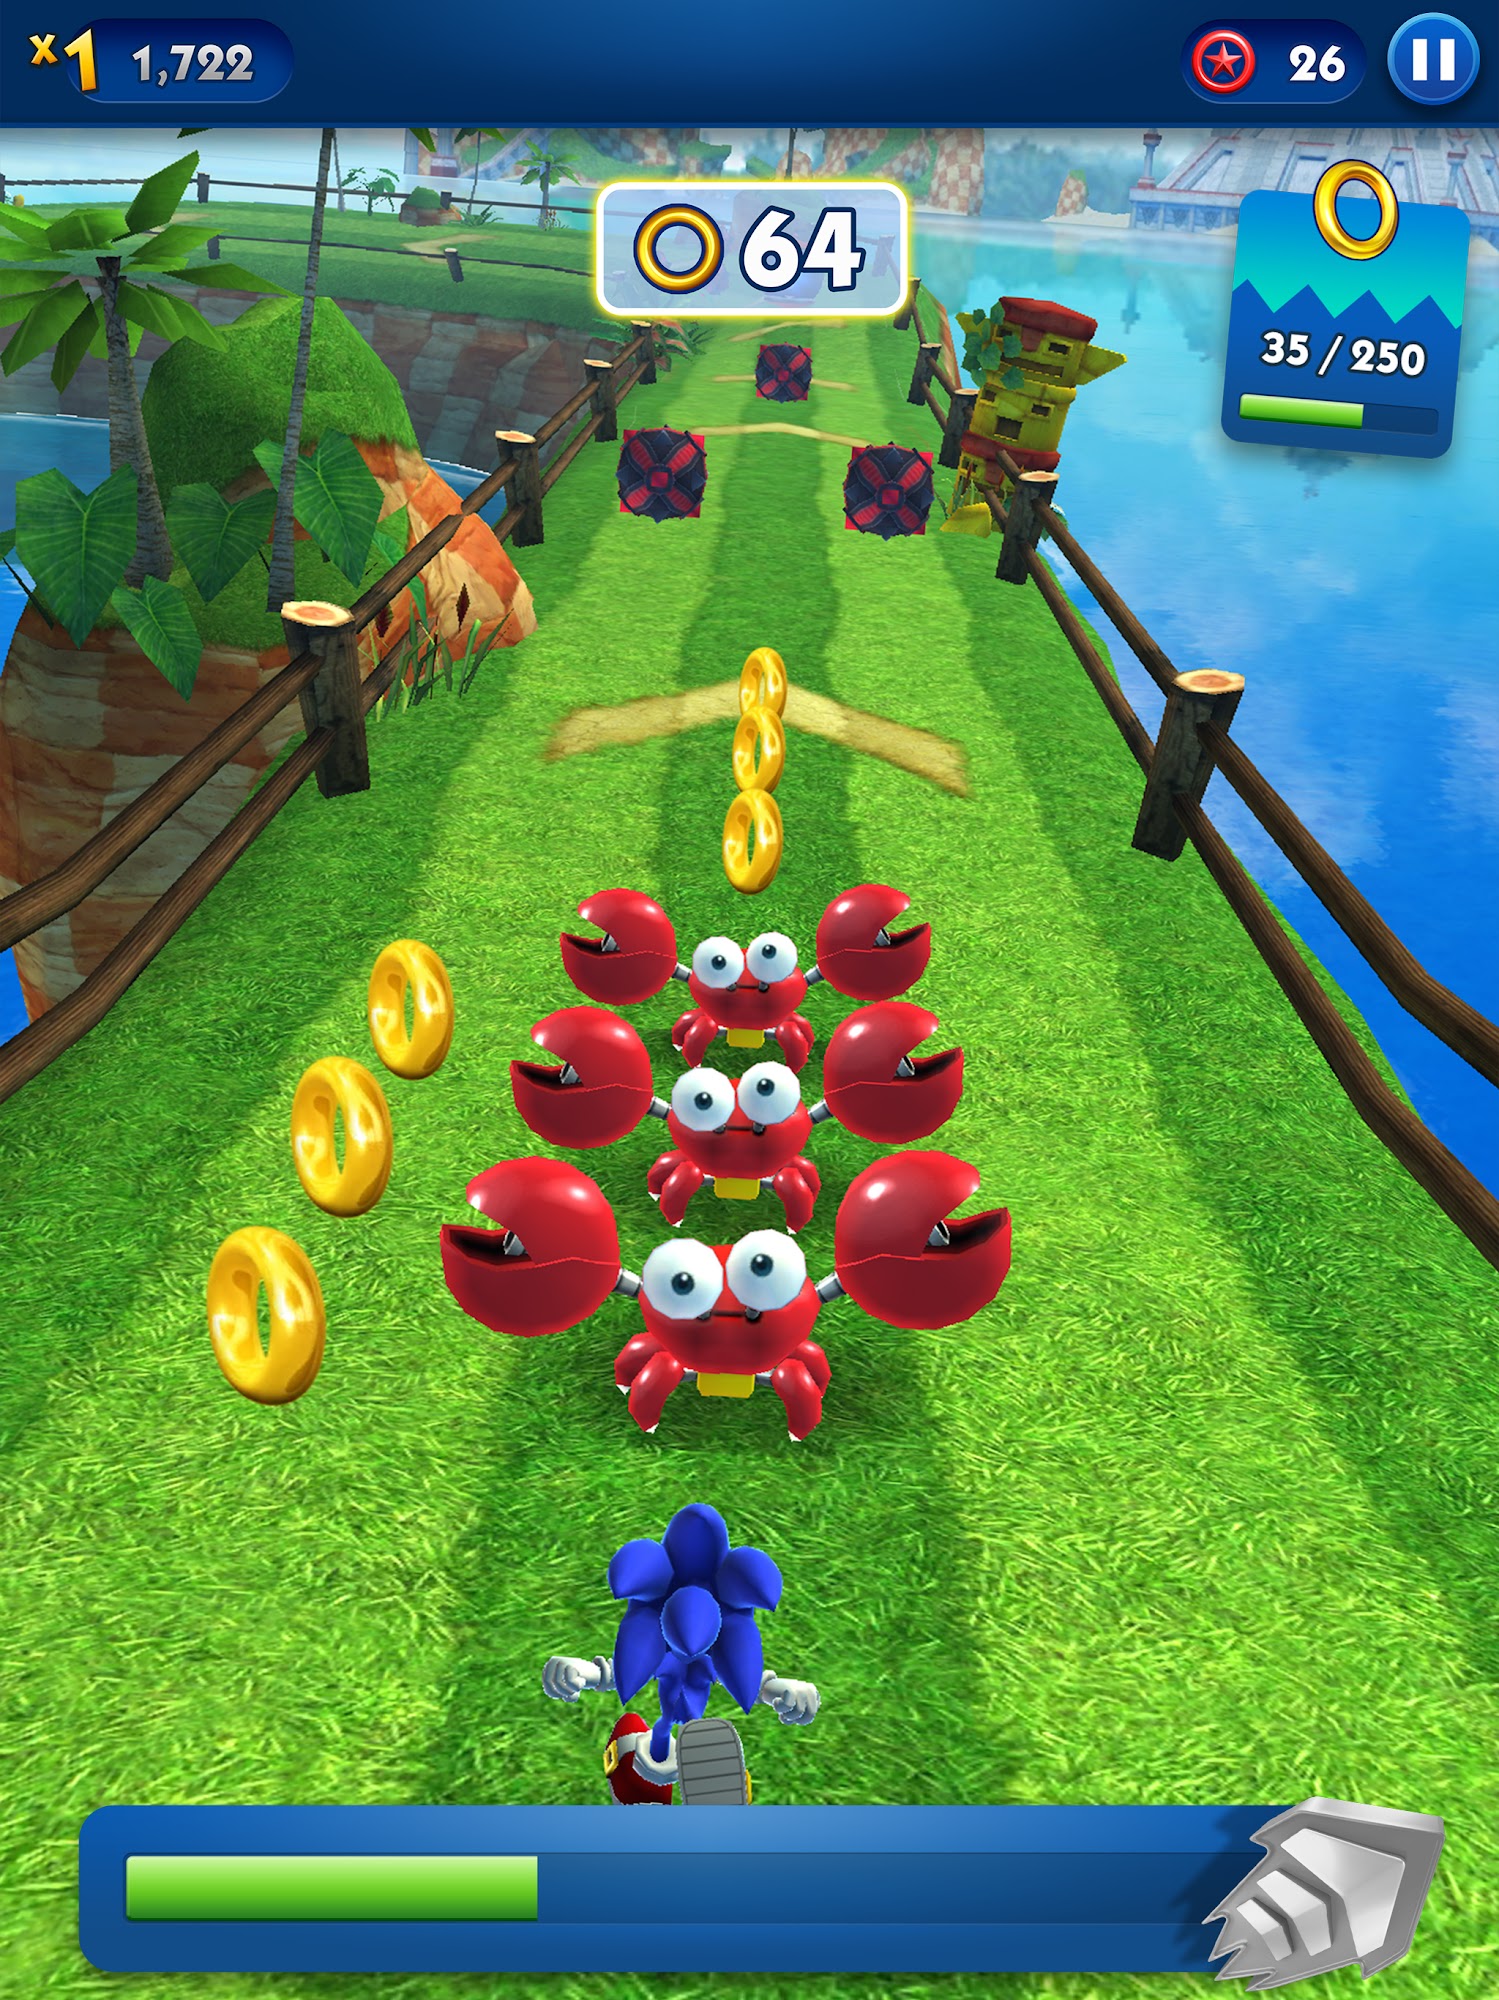 Download Sonic Prime Dash für Android kostenlos.